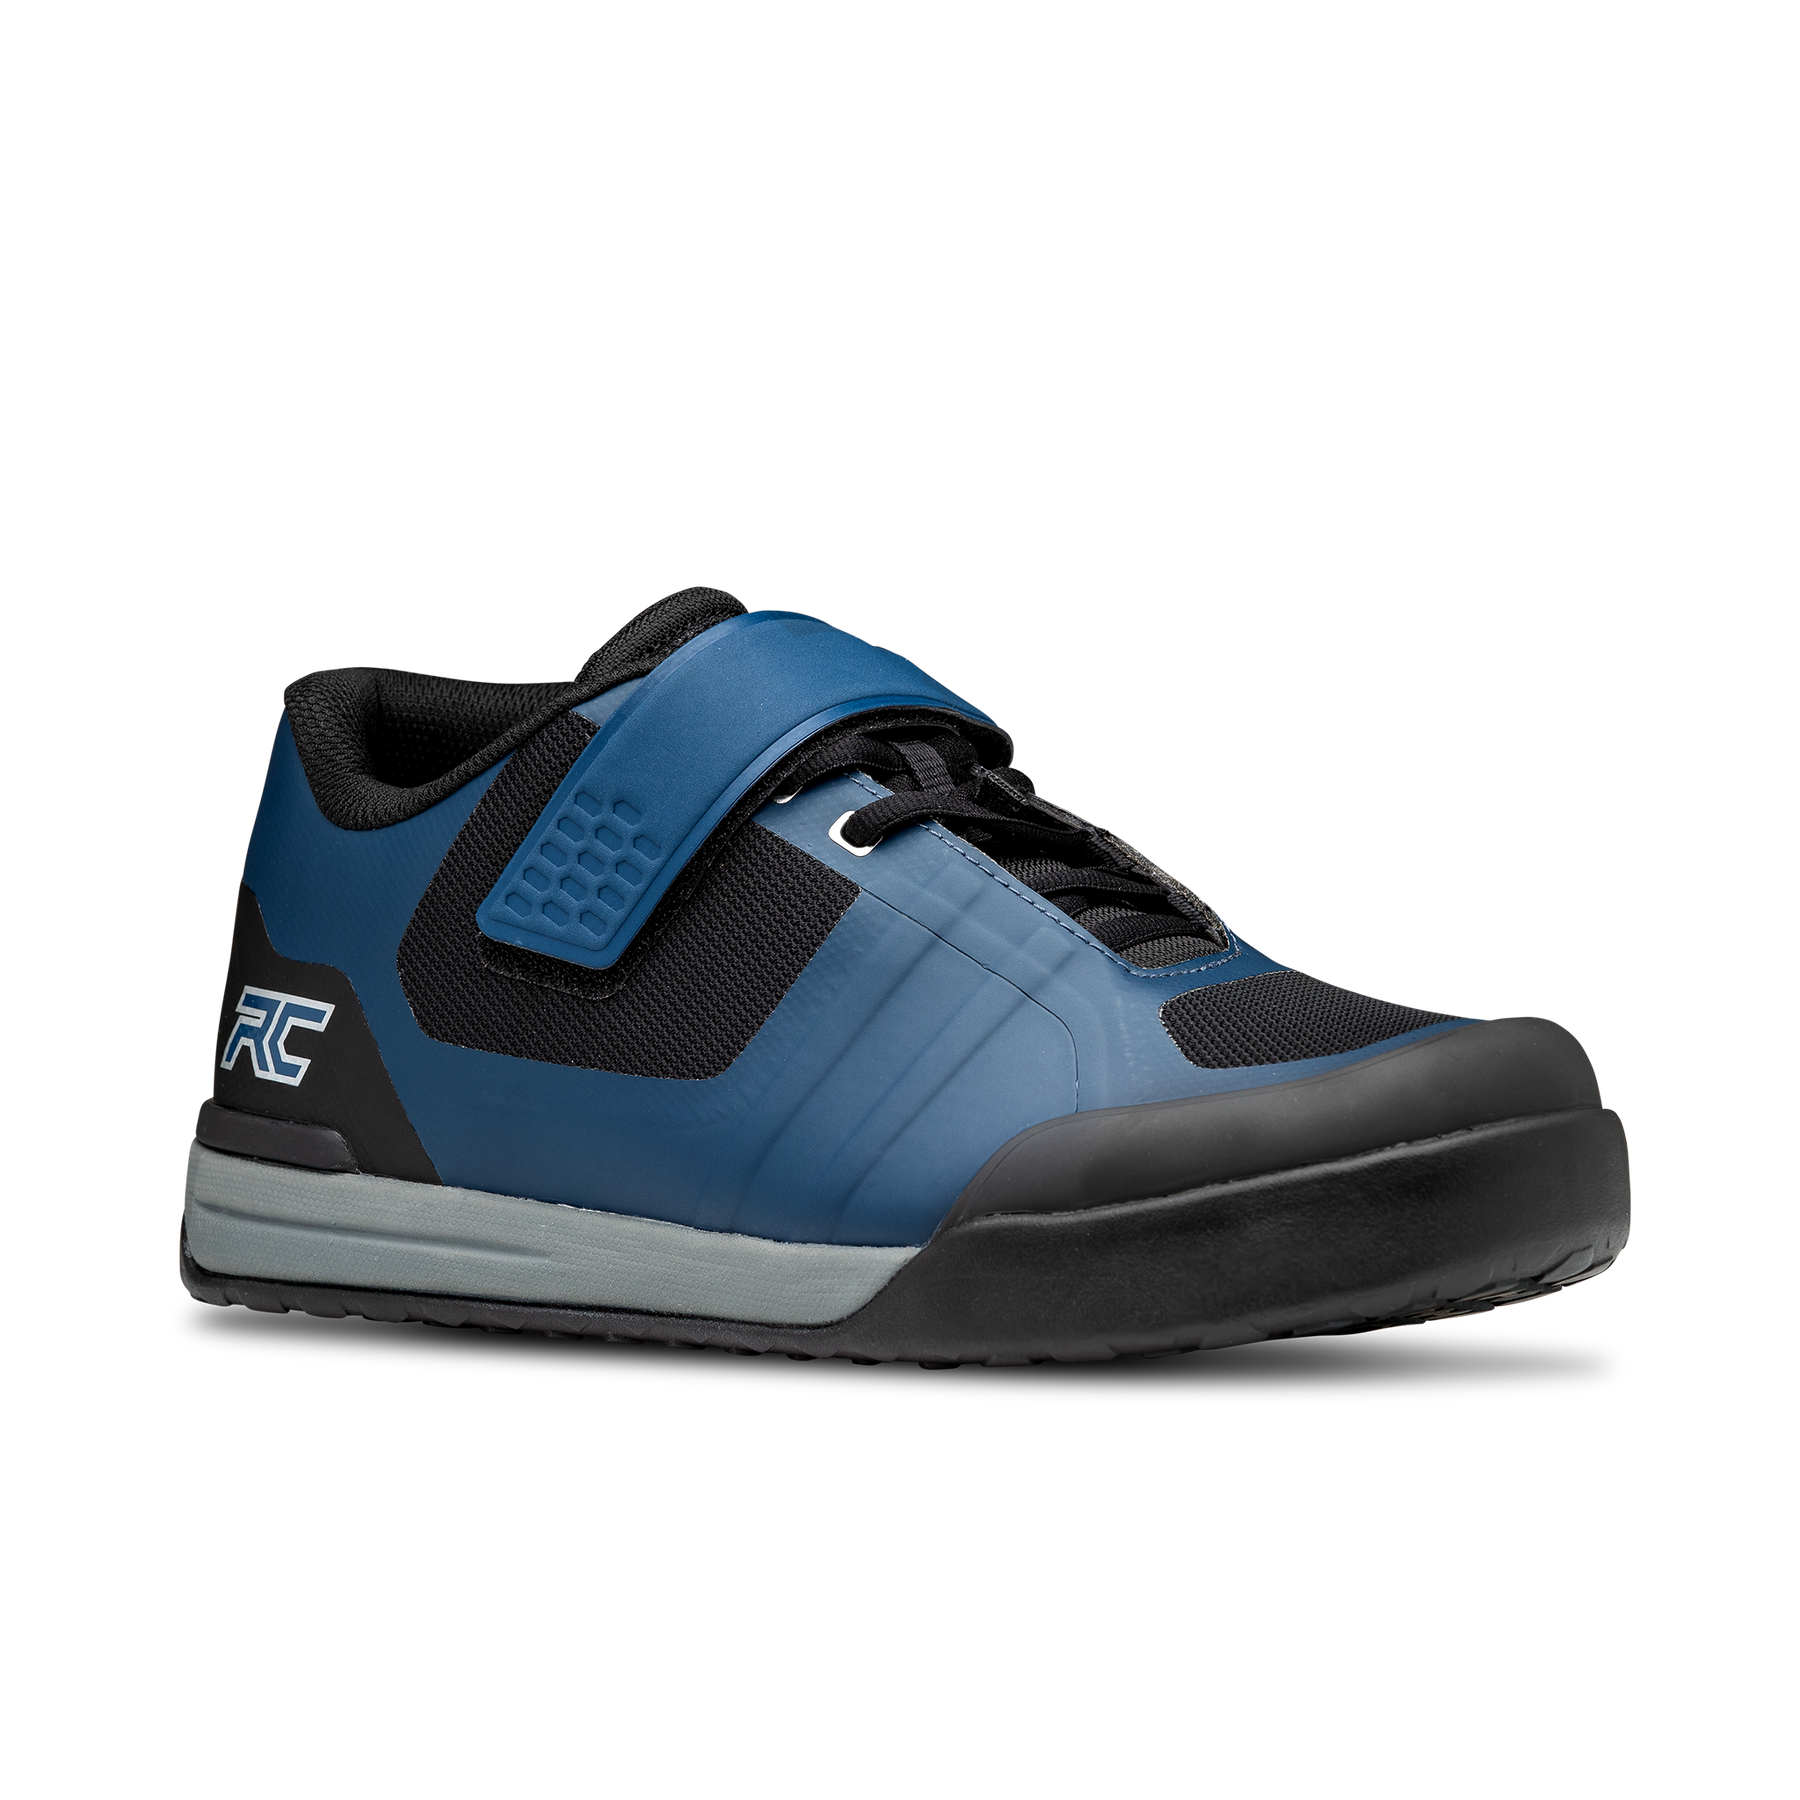 Ride Concepts Transition Spd Shoes - US 11.0 - Marine Blue - Image 1